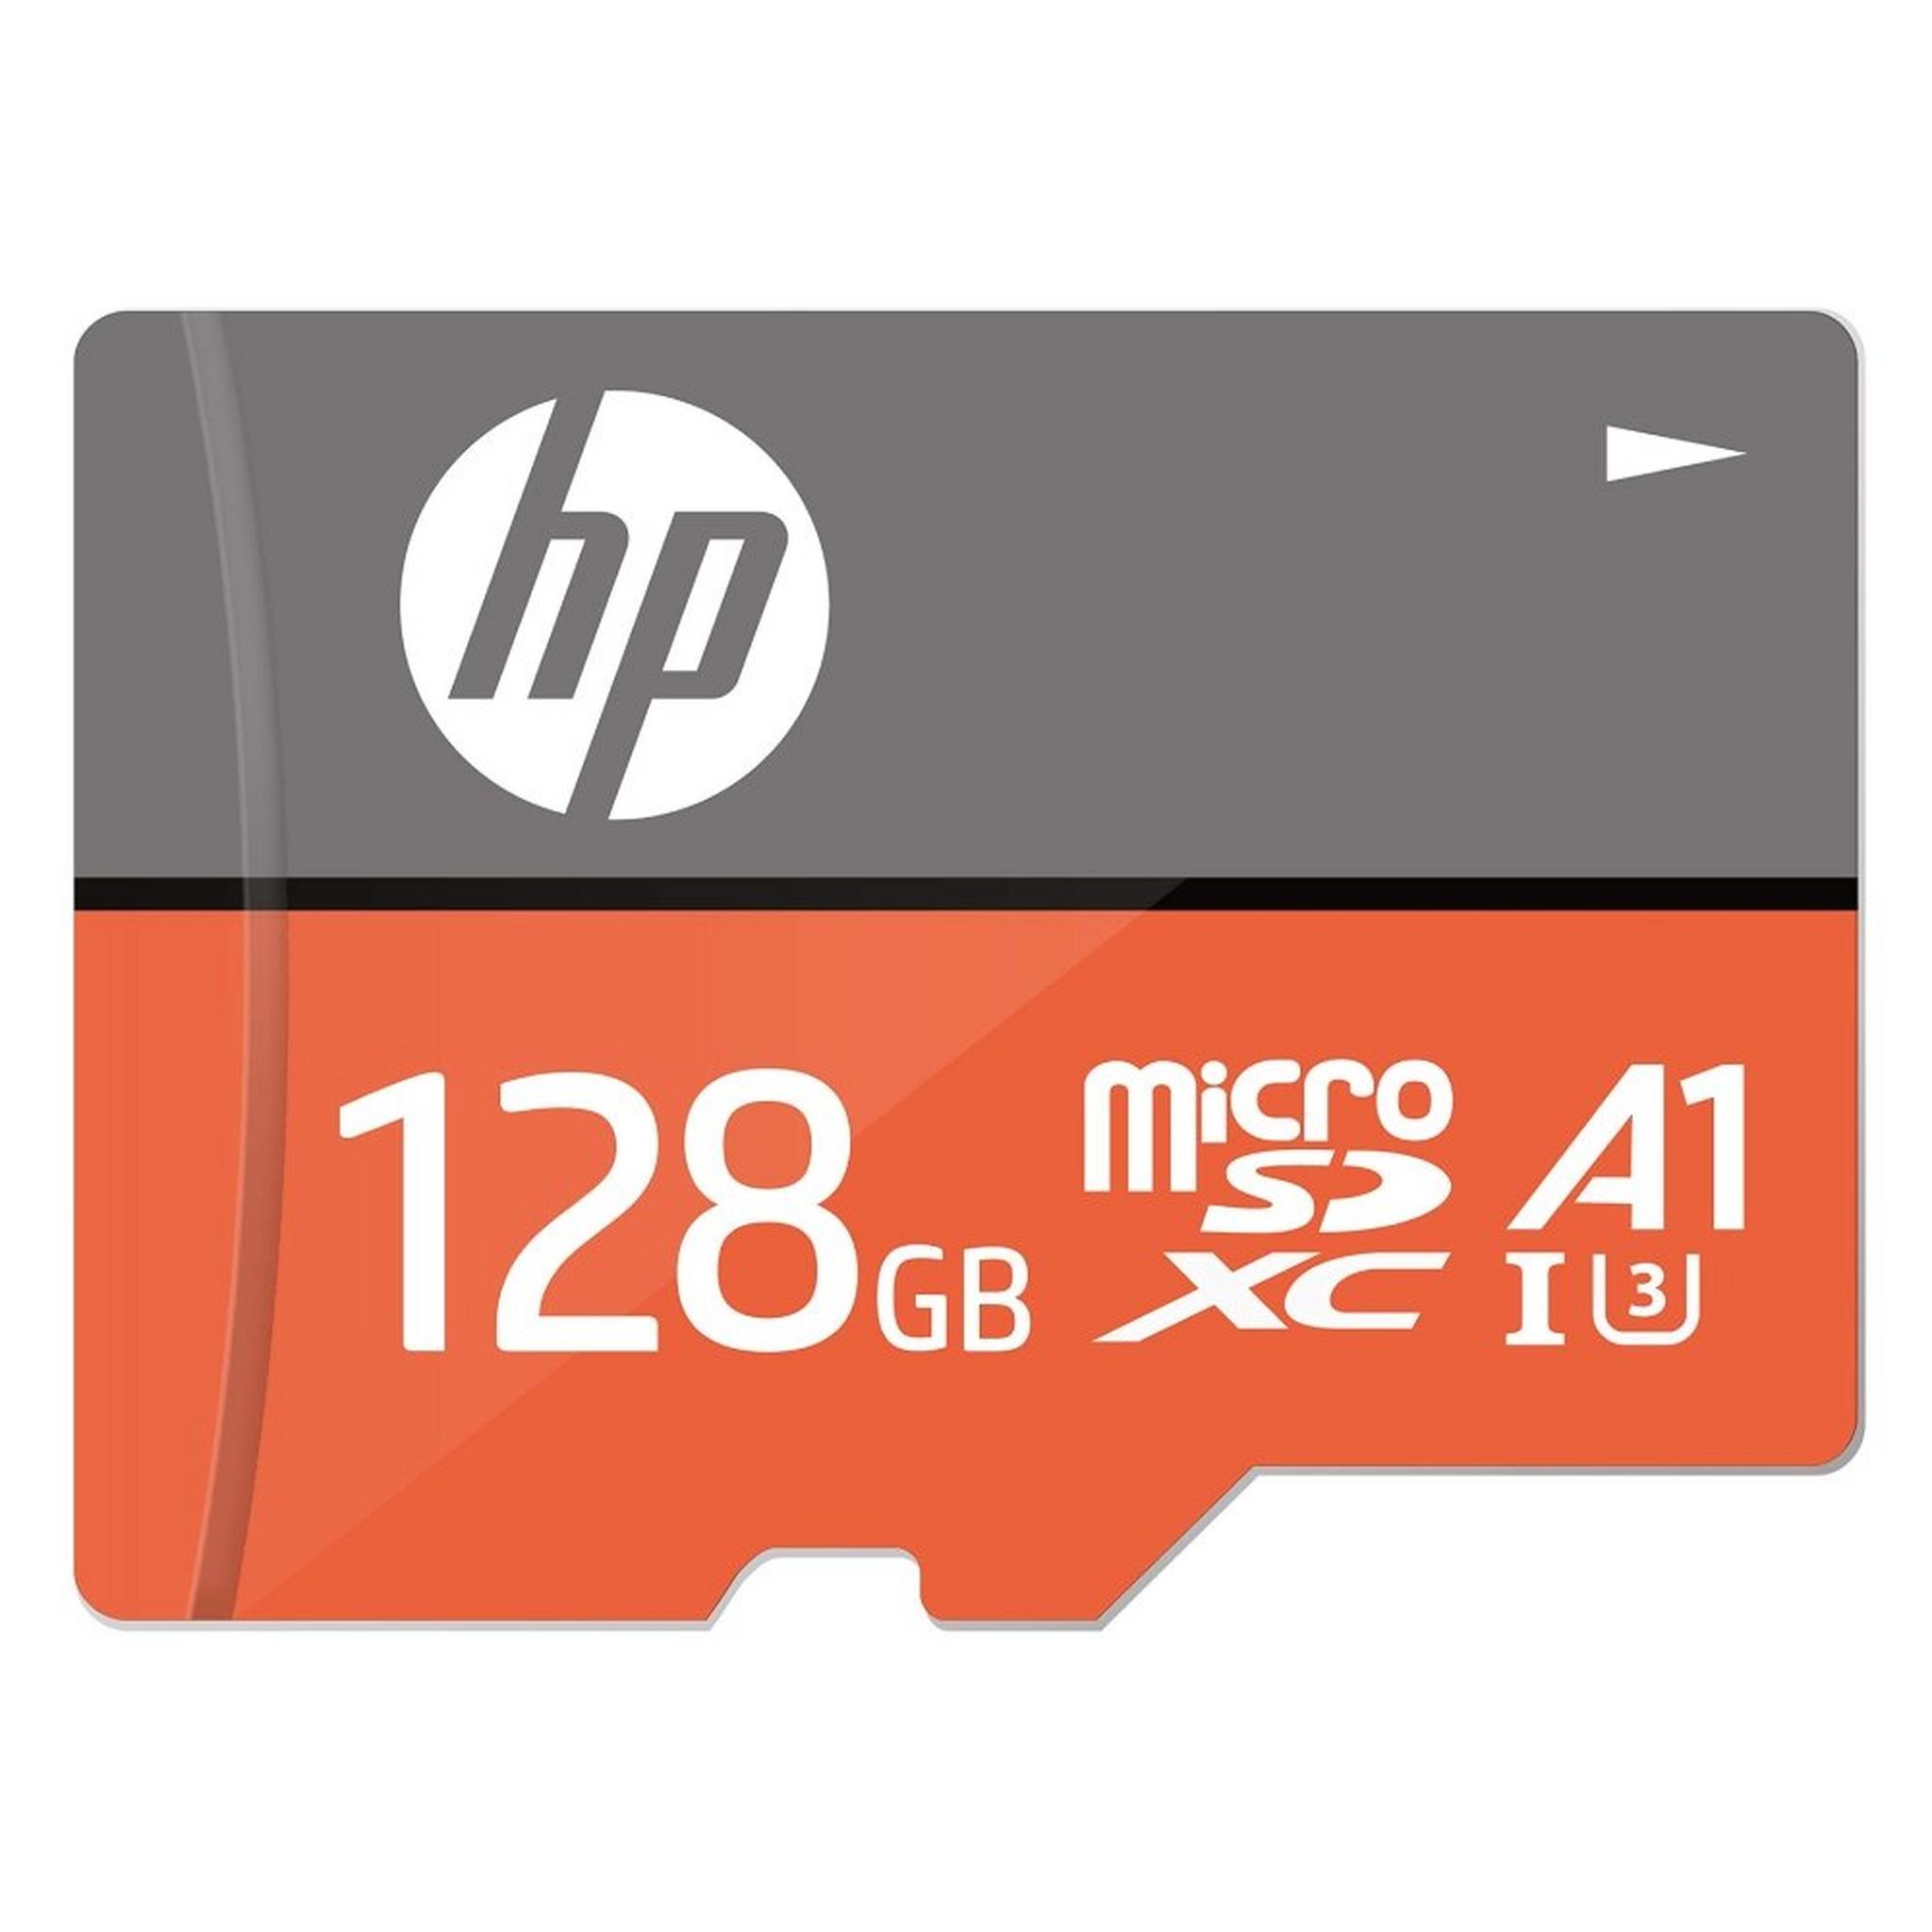 HP 128GB MXA1 Class 10 U3 MicroSDXC Read Speeds up to 100MB/S with SD Adapter